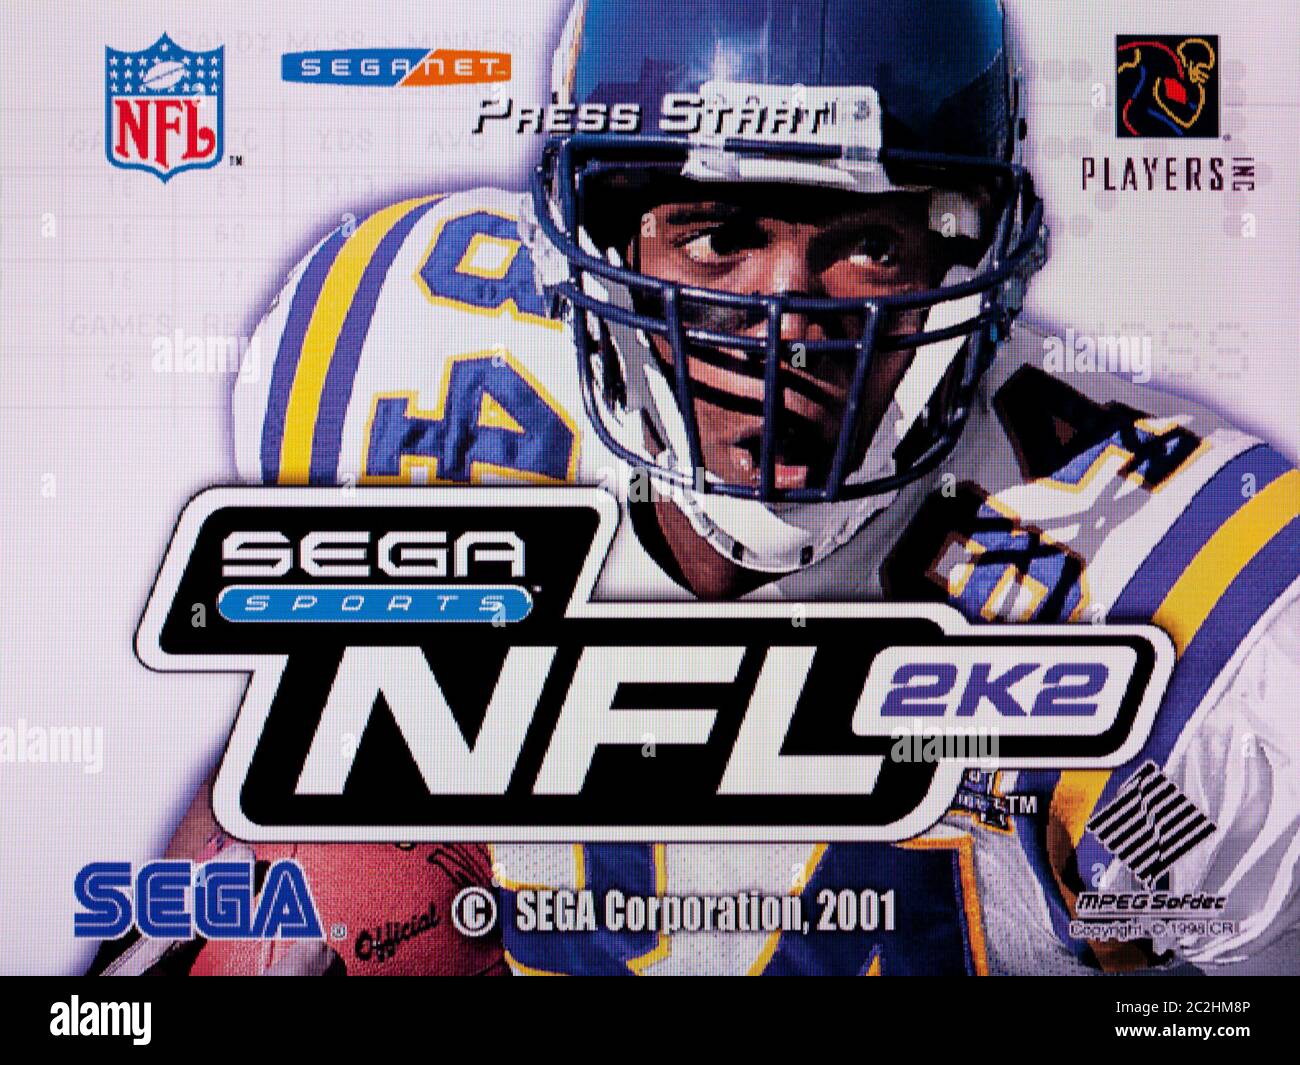 NFL 2K2 - Sega Dreamcast Videogame - Editorial use only Stock Photo